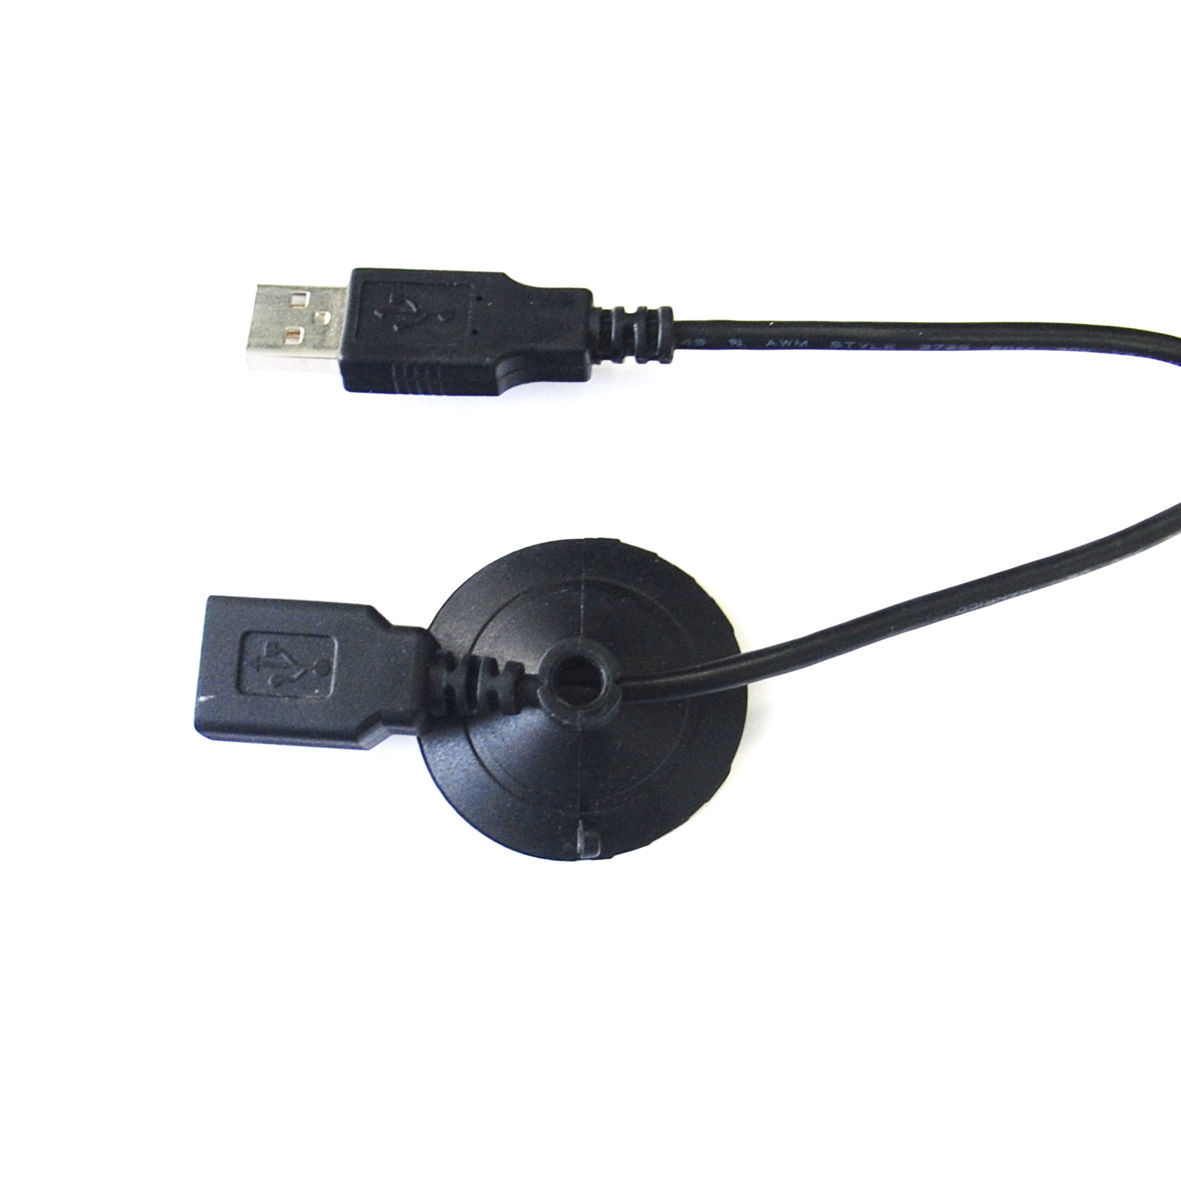 USB удлинитель 3 метра 3G/4G LTE модема WiFi роутера